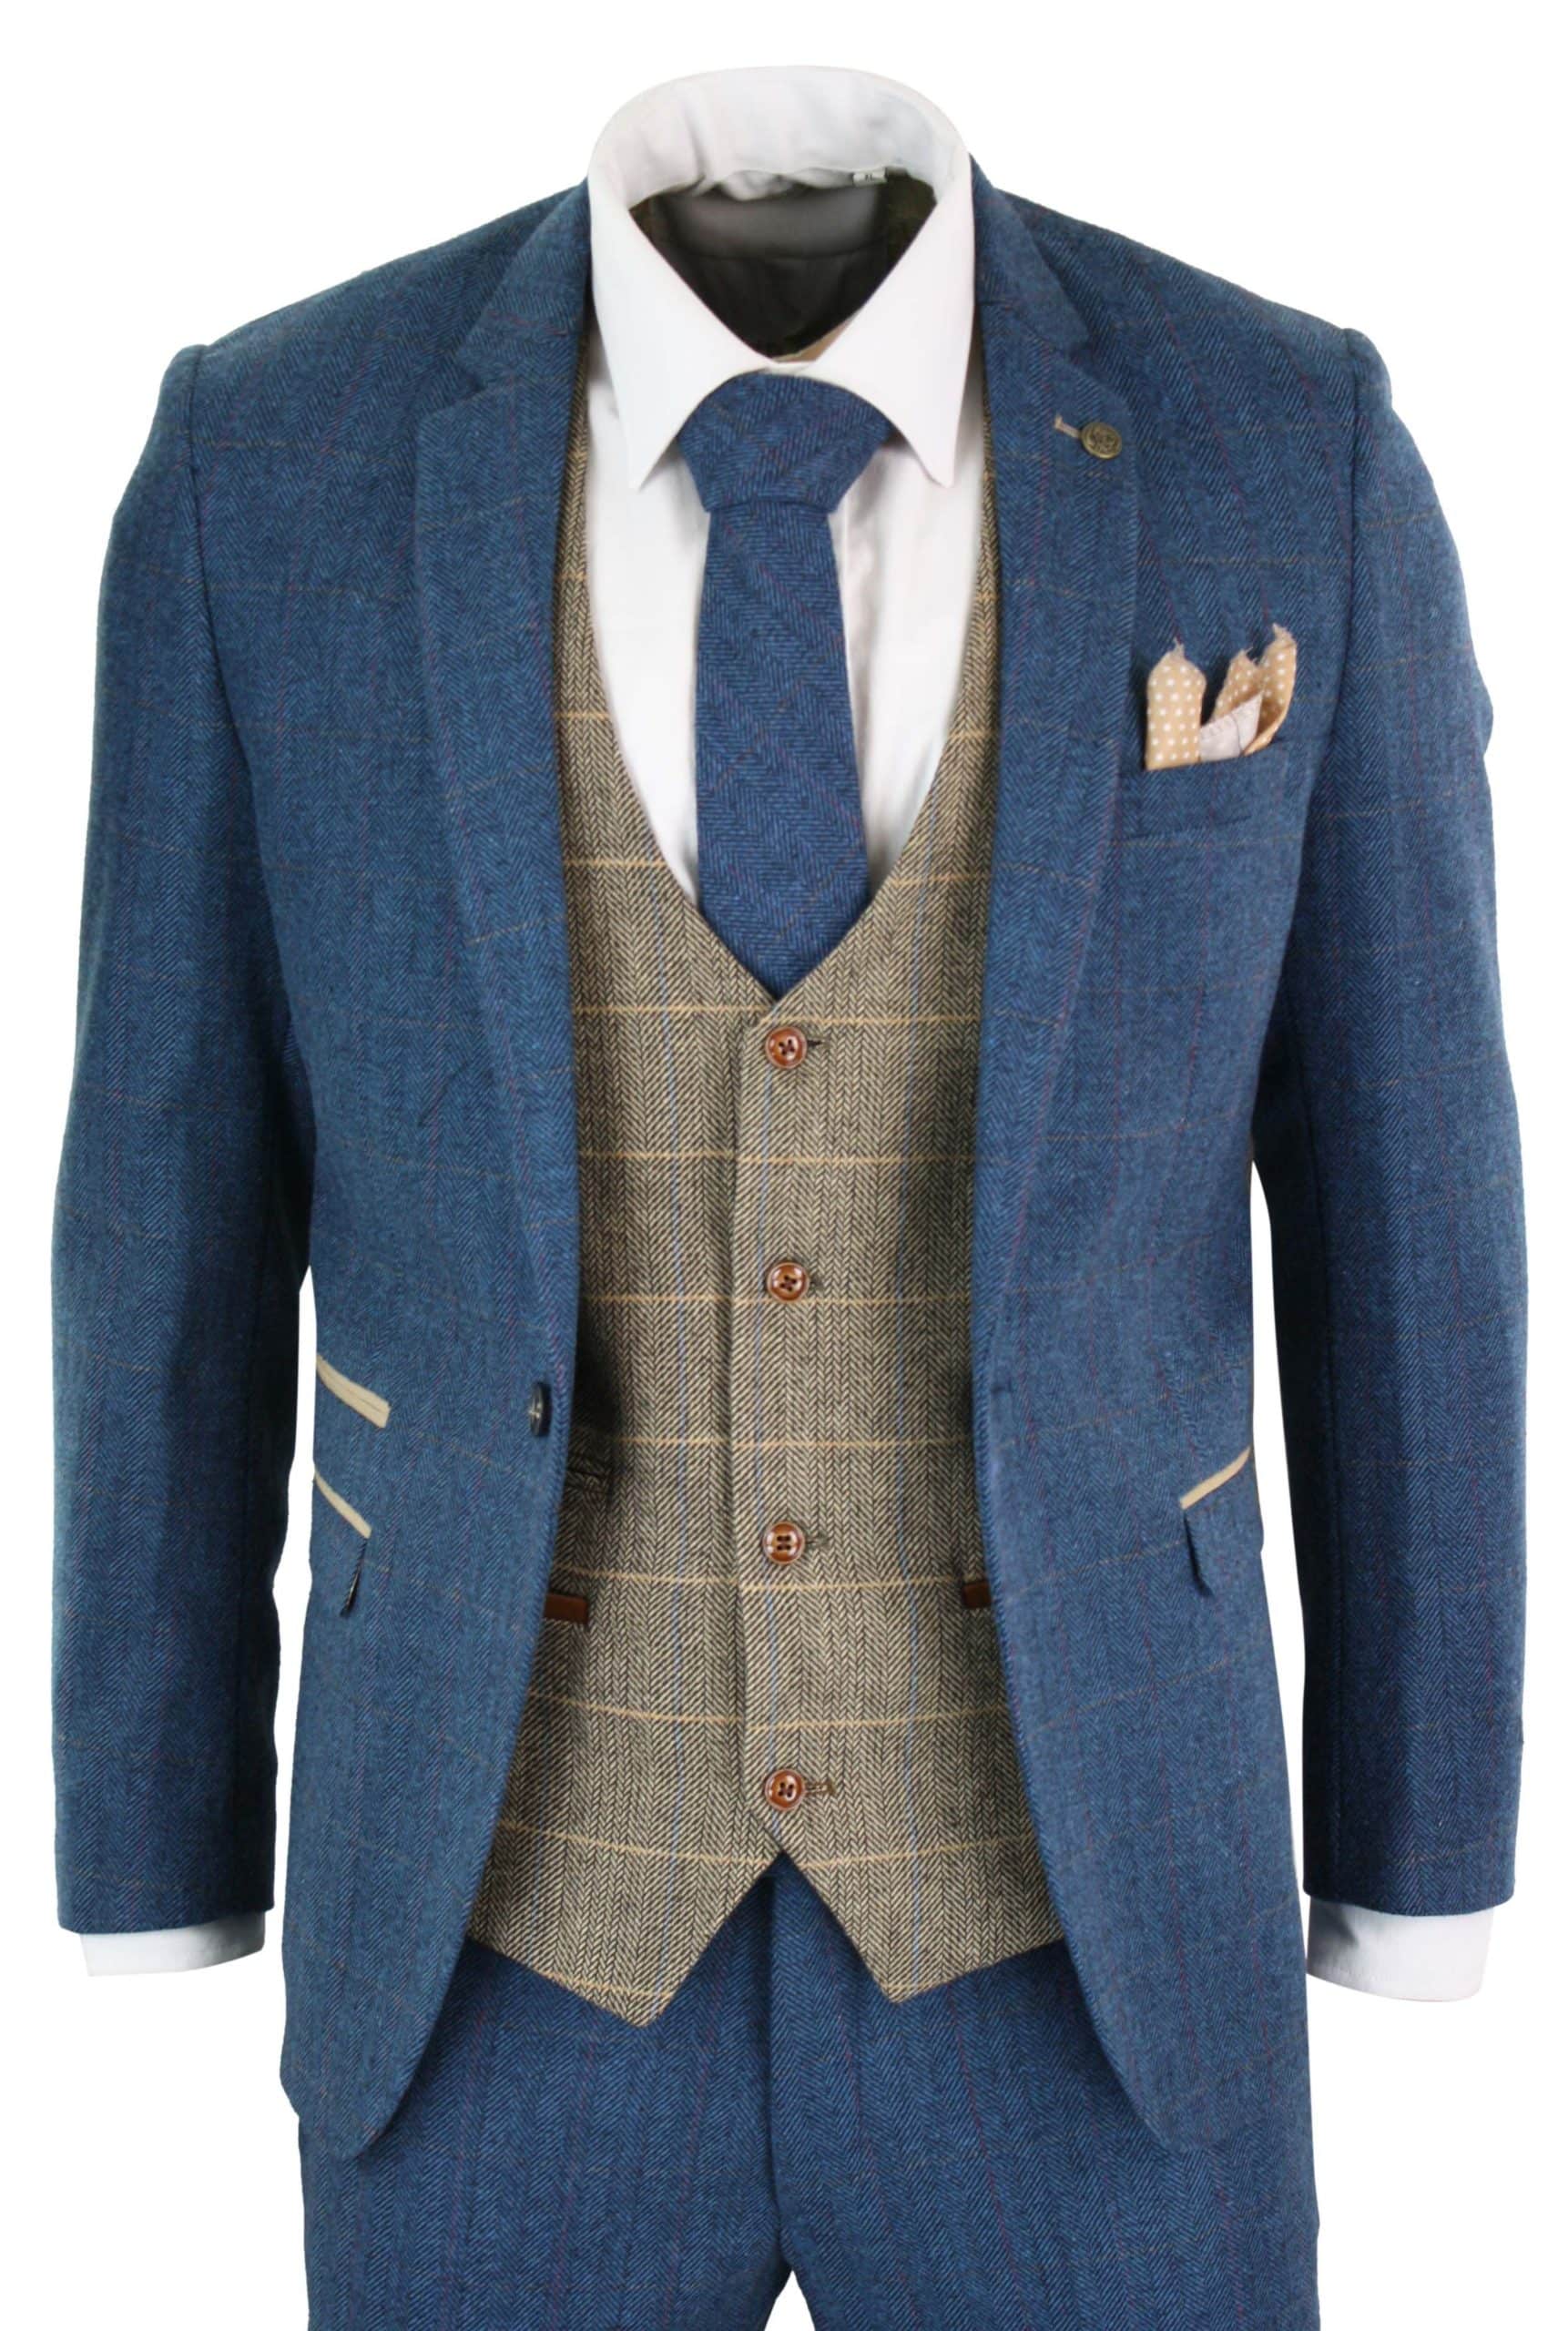 Mens Tan Tweed Waistcoat Marc Darcy Wool Style Vintage Retro Check Vest 